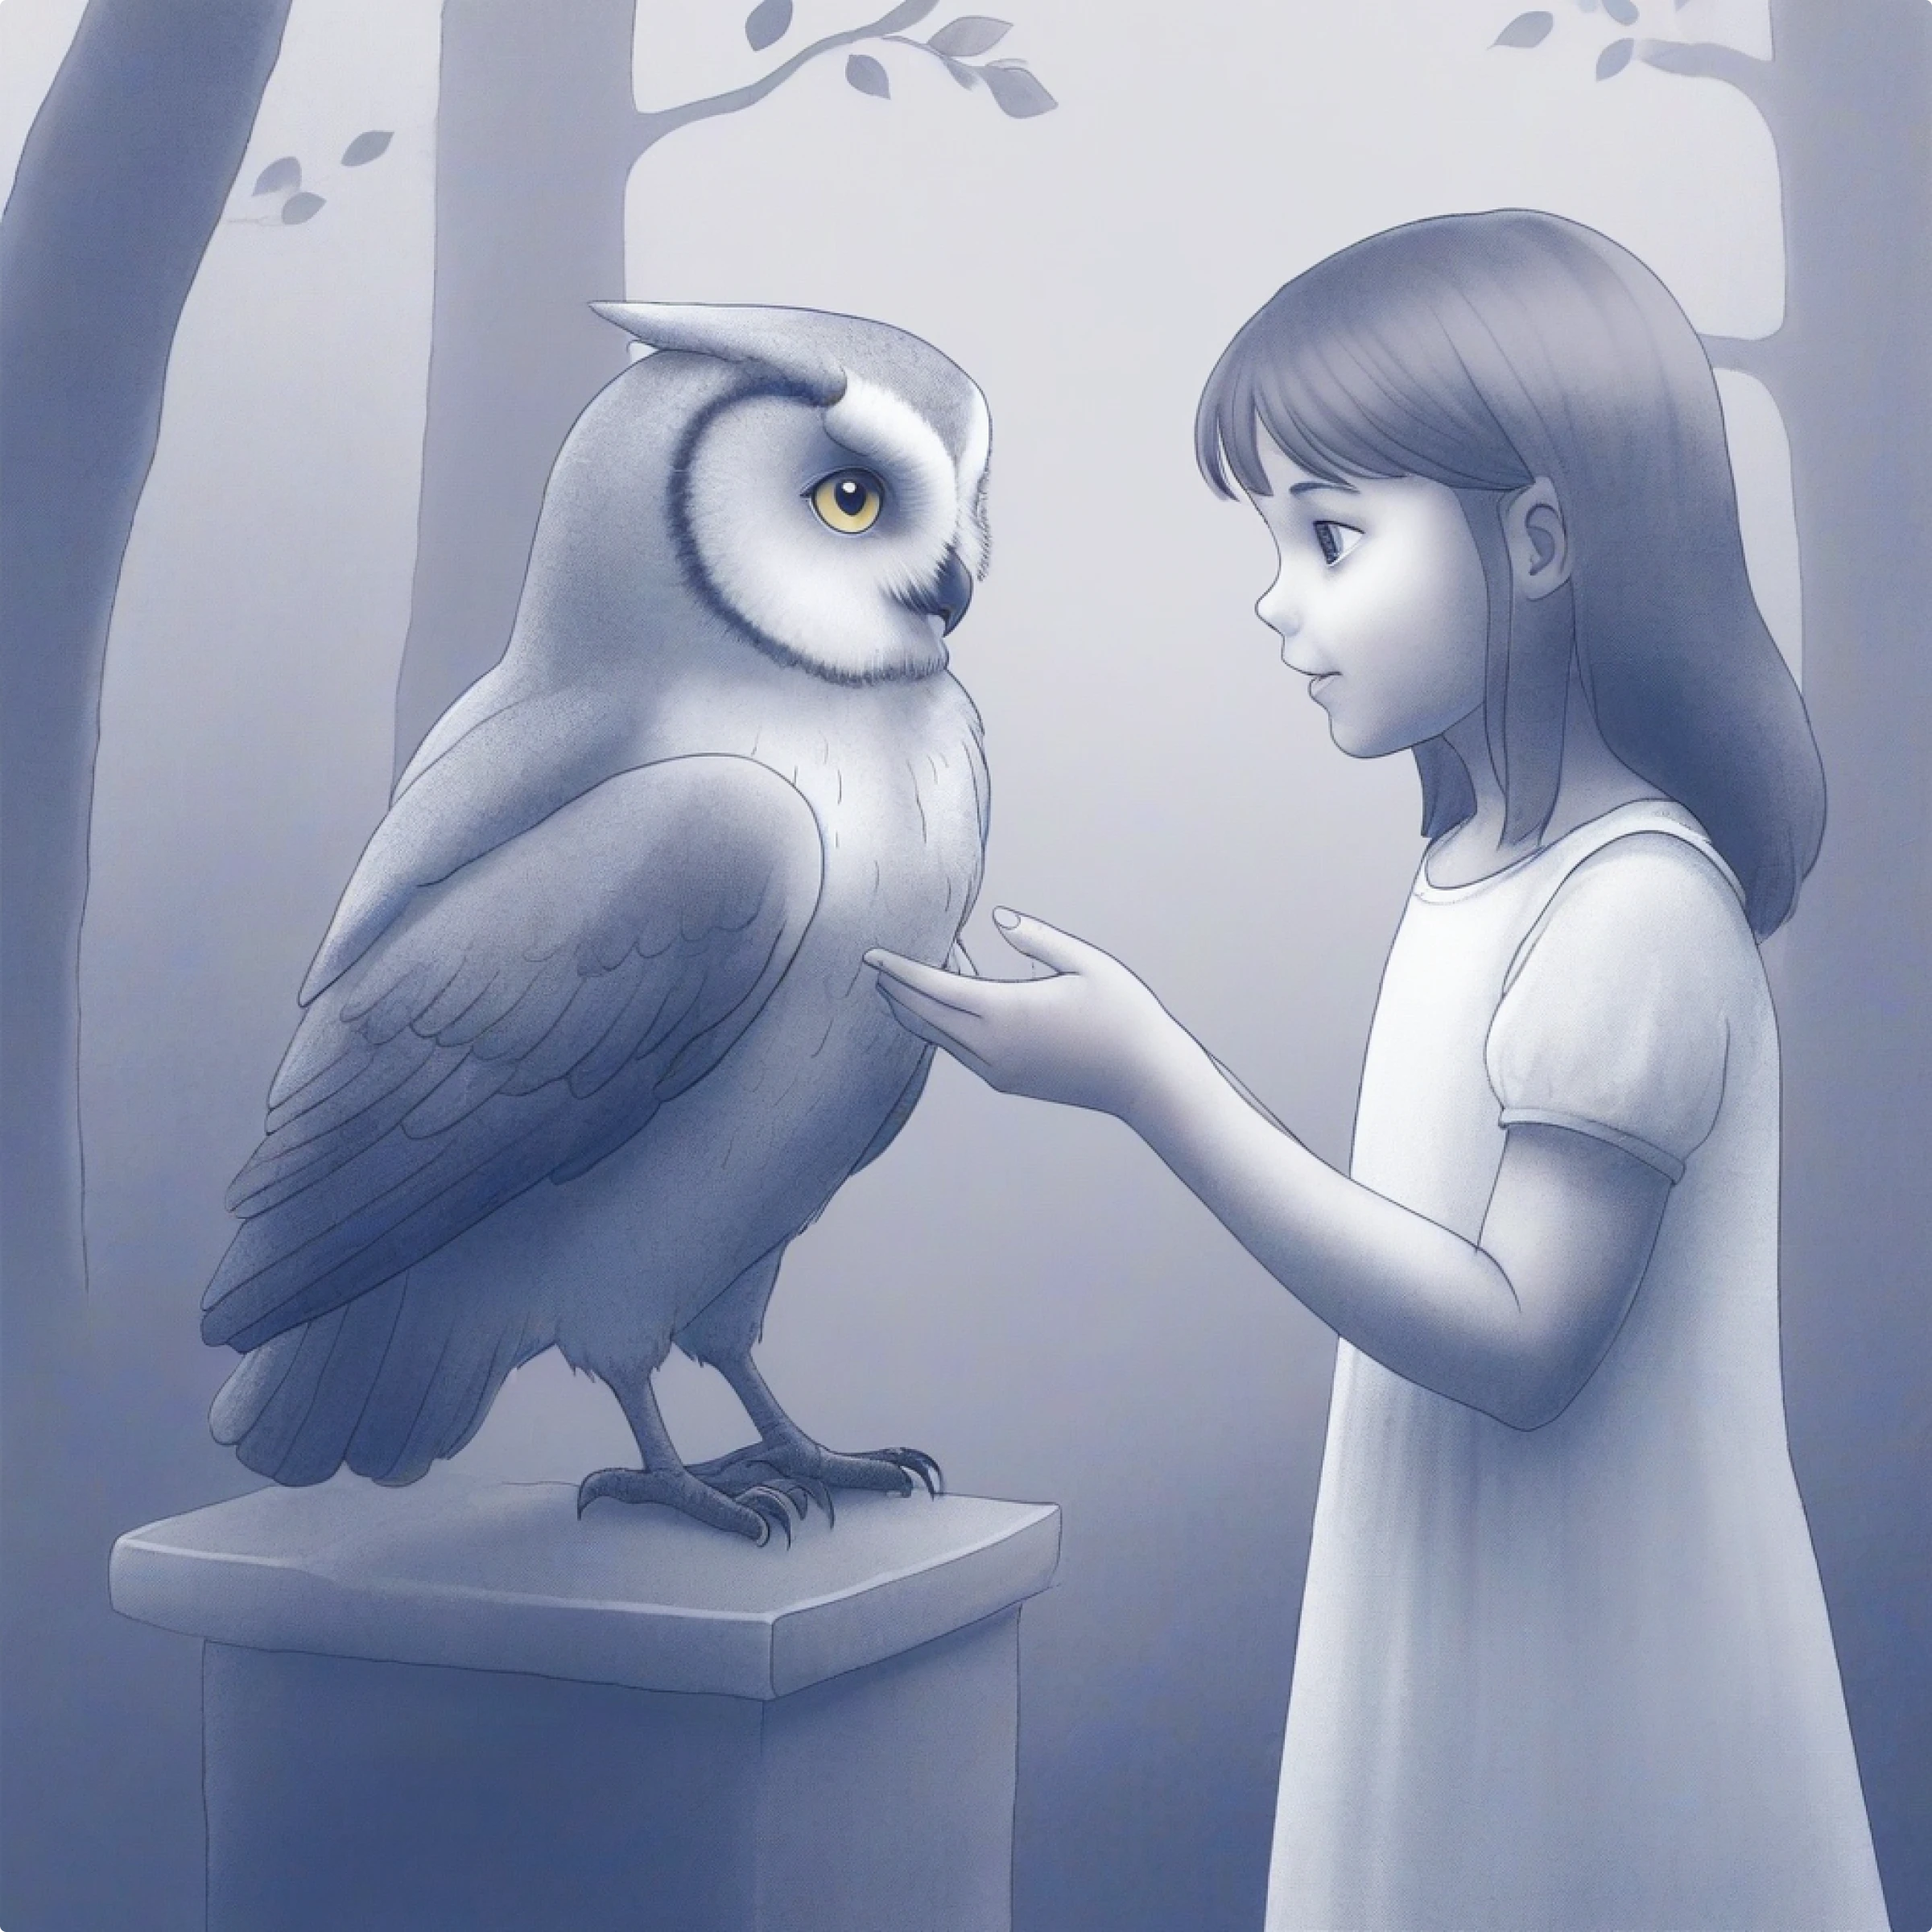 ella with owl children's book illustration